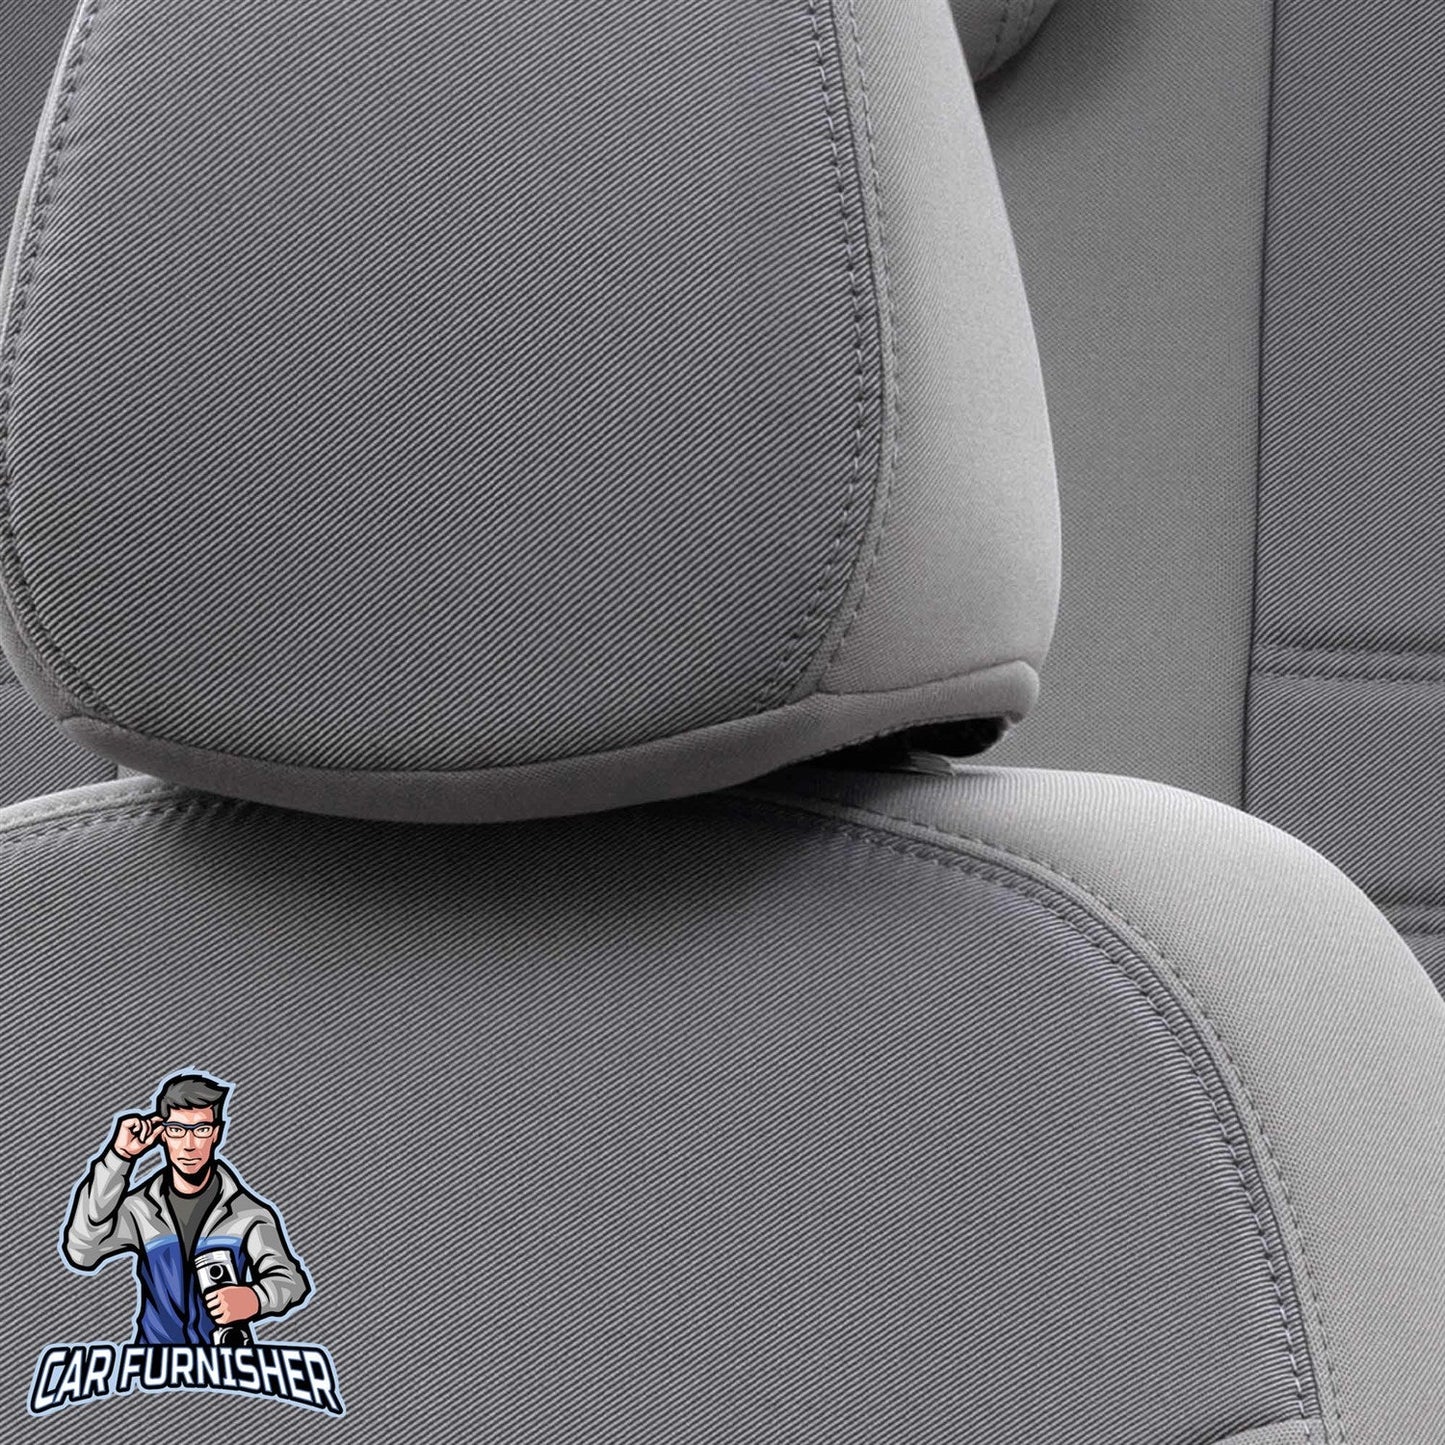 Mini Countryman Seat Covers Original Jacquard Design Gray Jacquard Fabric